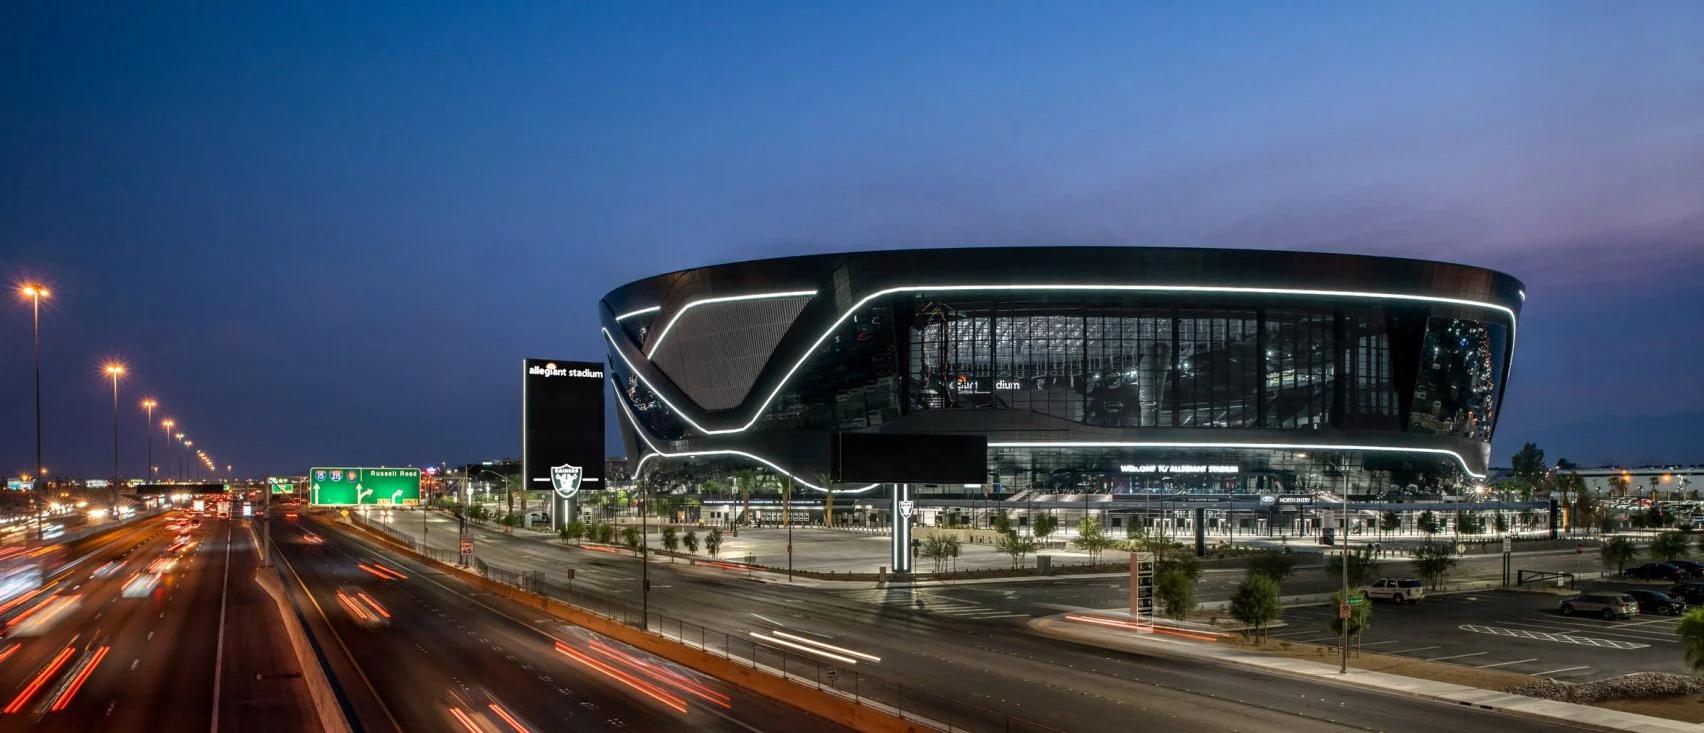 Allegiant Stadium: A Technological Marvel in the Heart of Las Vegas -  Liwaiwai